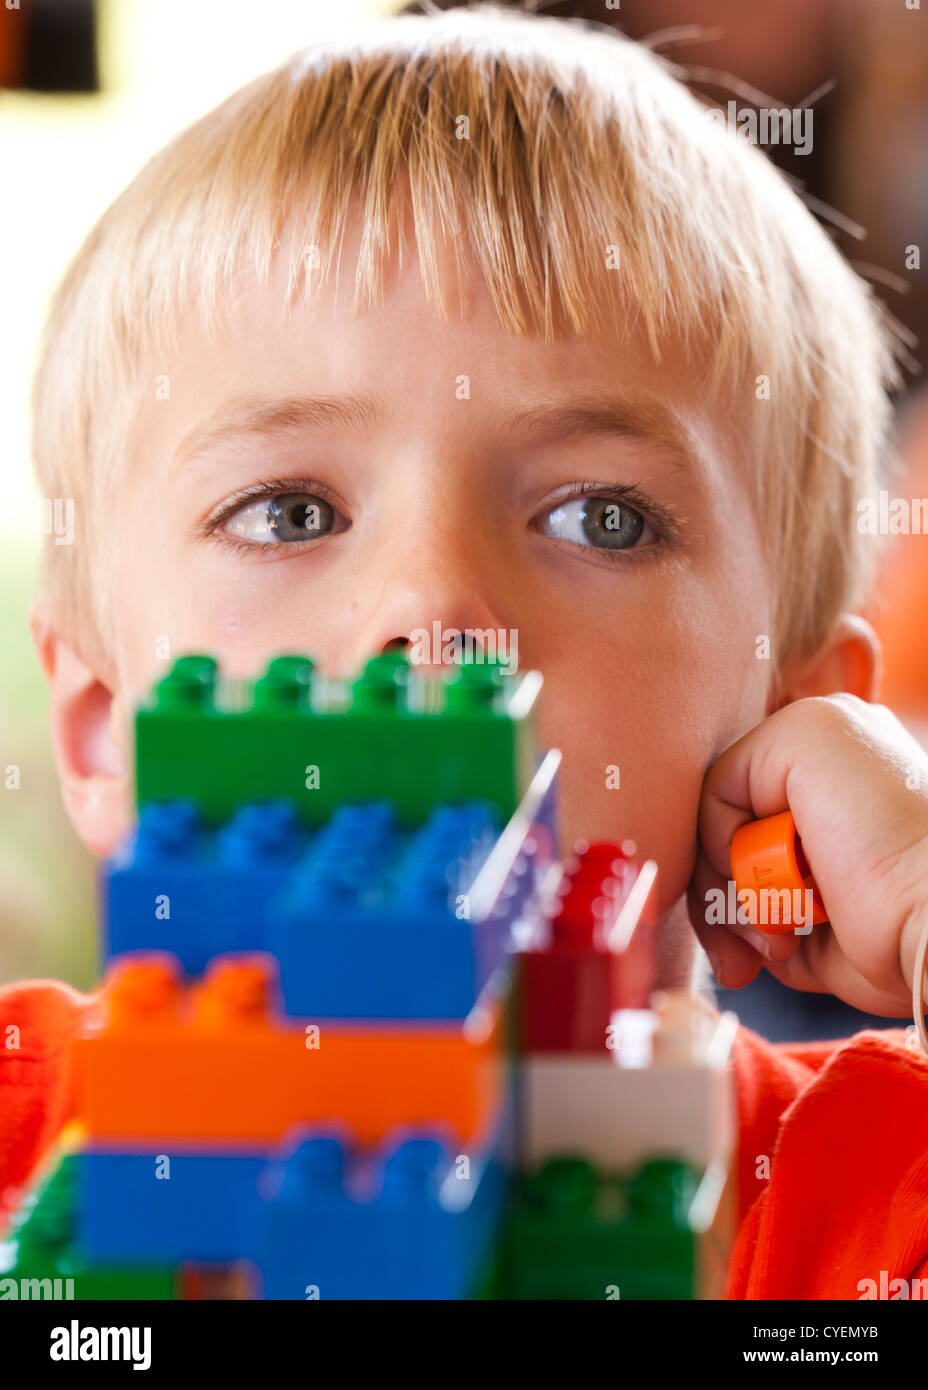 Caucasian boy with Lego bricks Stock Photo